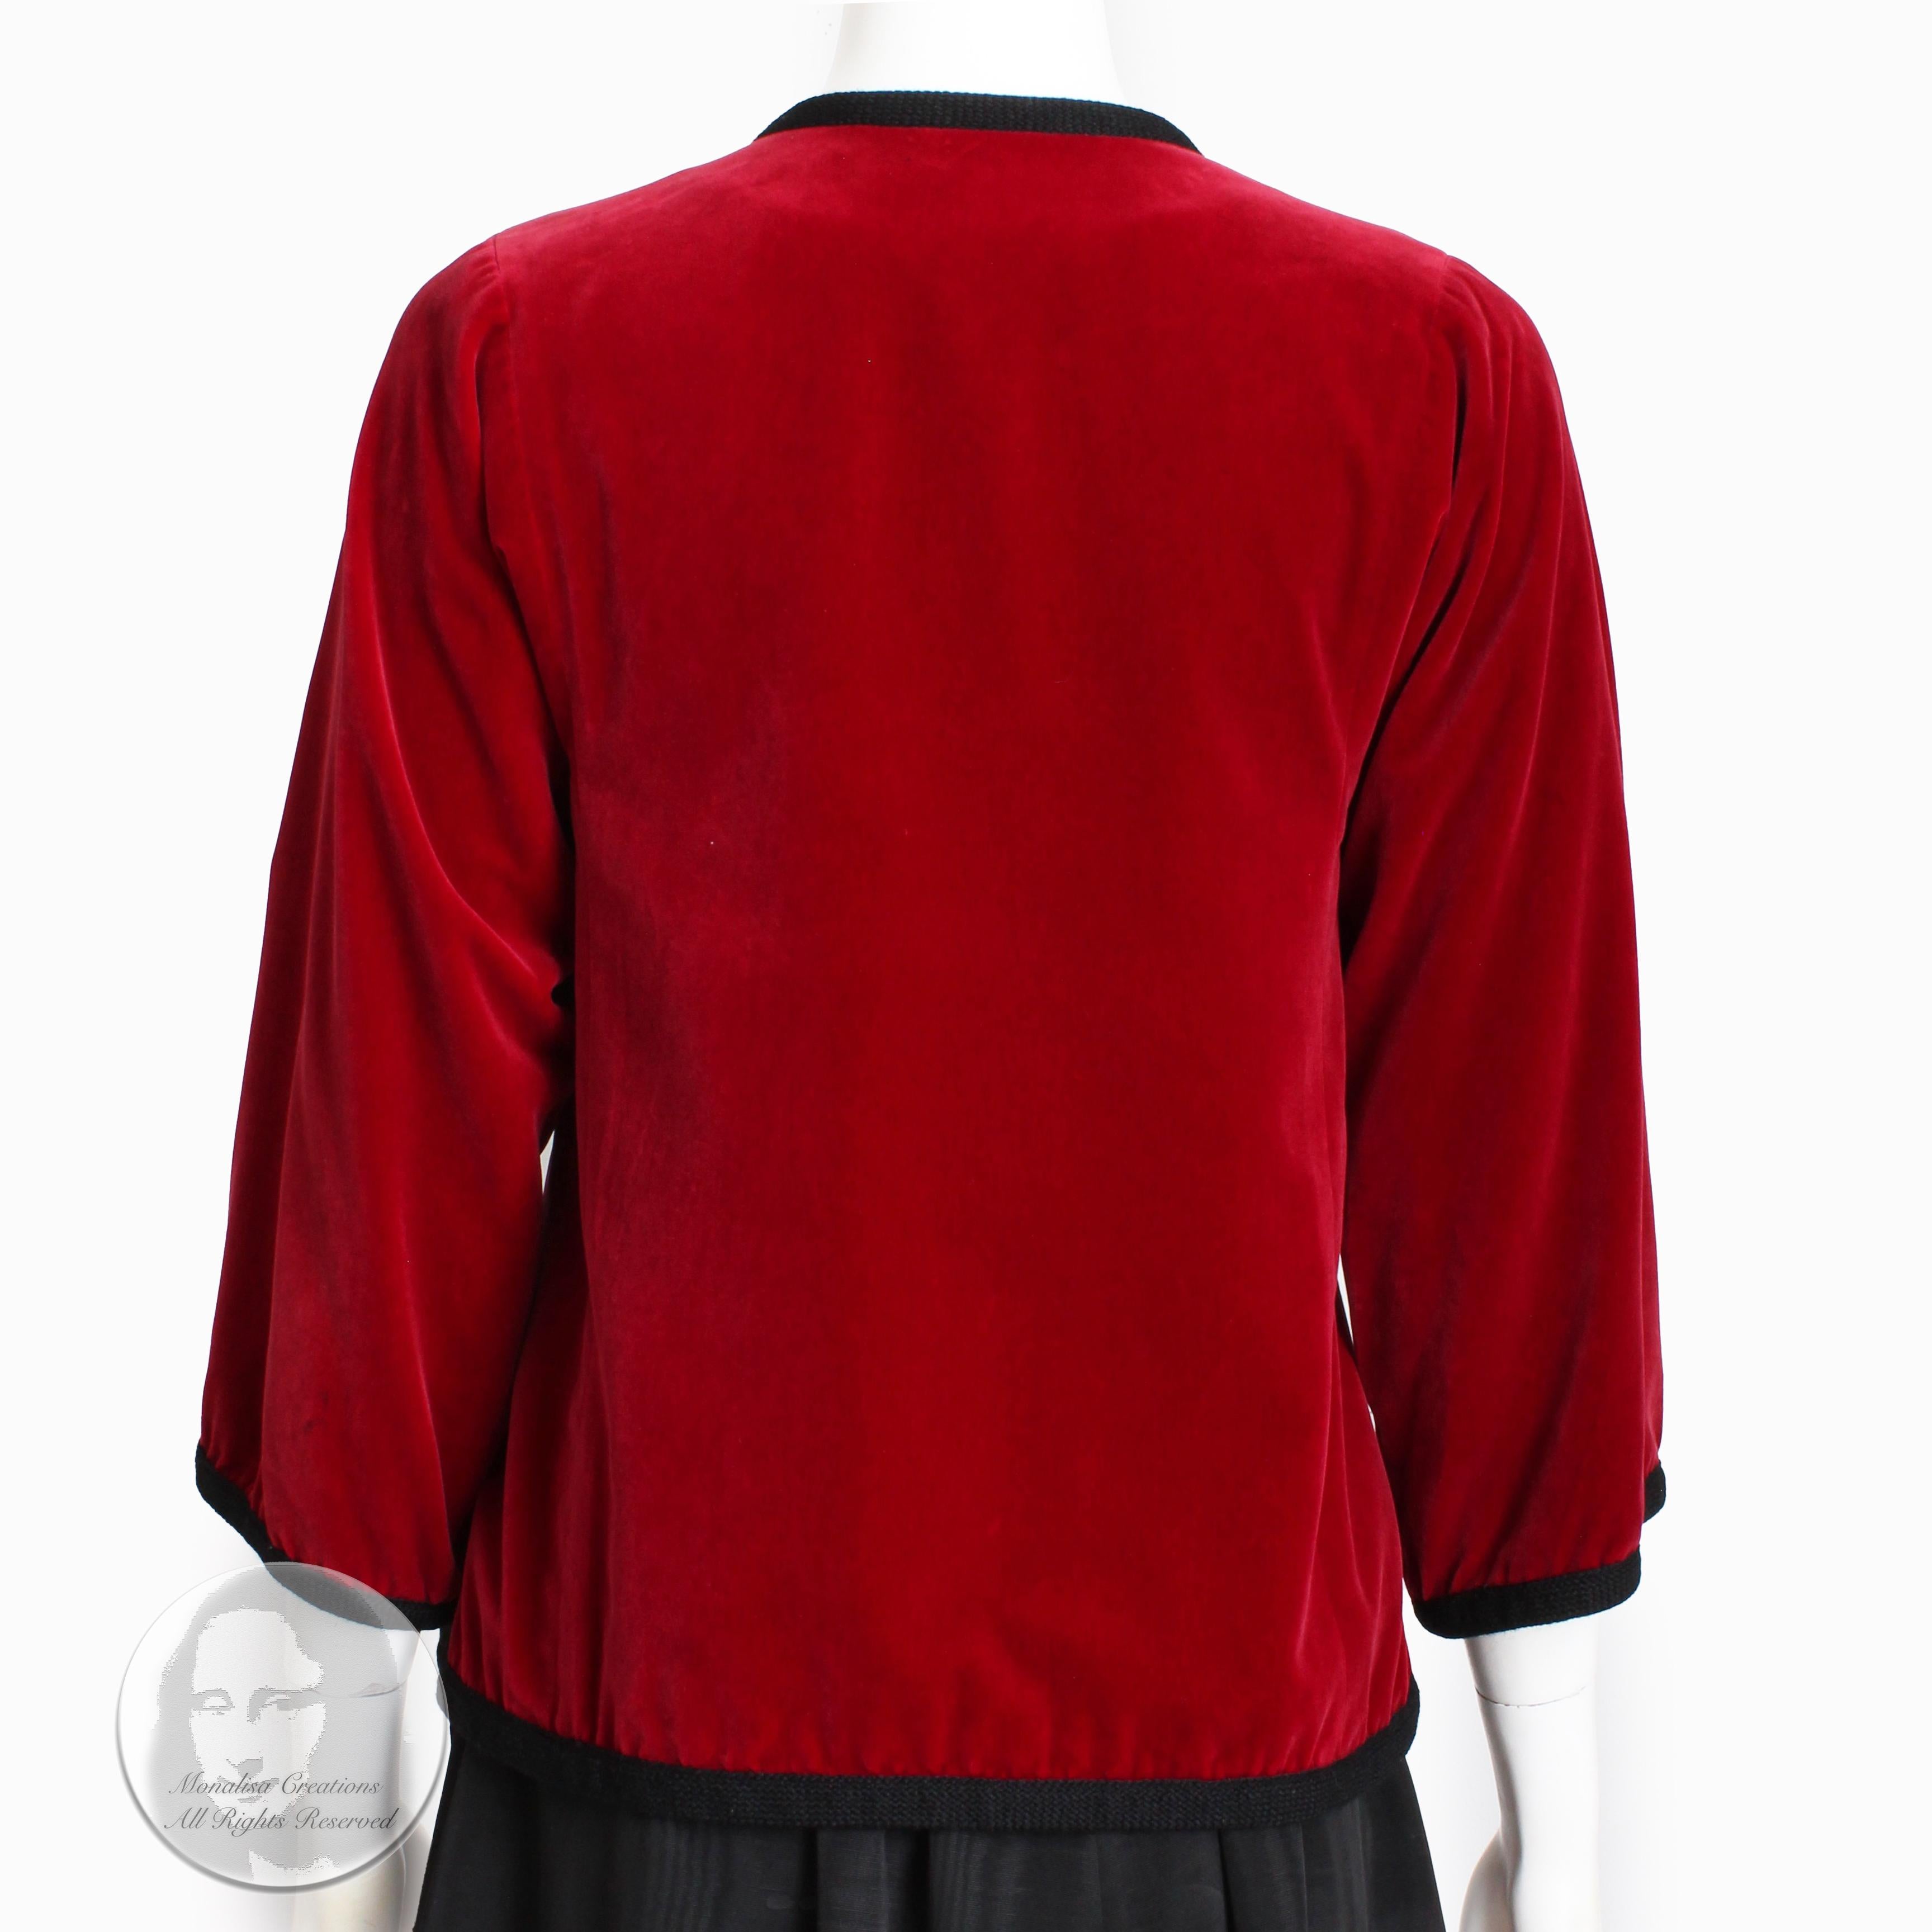 Yves Saint Laurent Jacket Red Velvet Black Trim Ballet Russes Vintage 70s Sz 38 For Sale 2